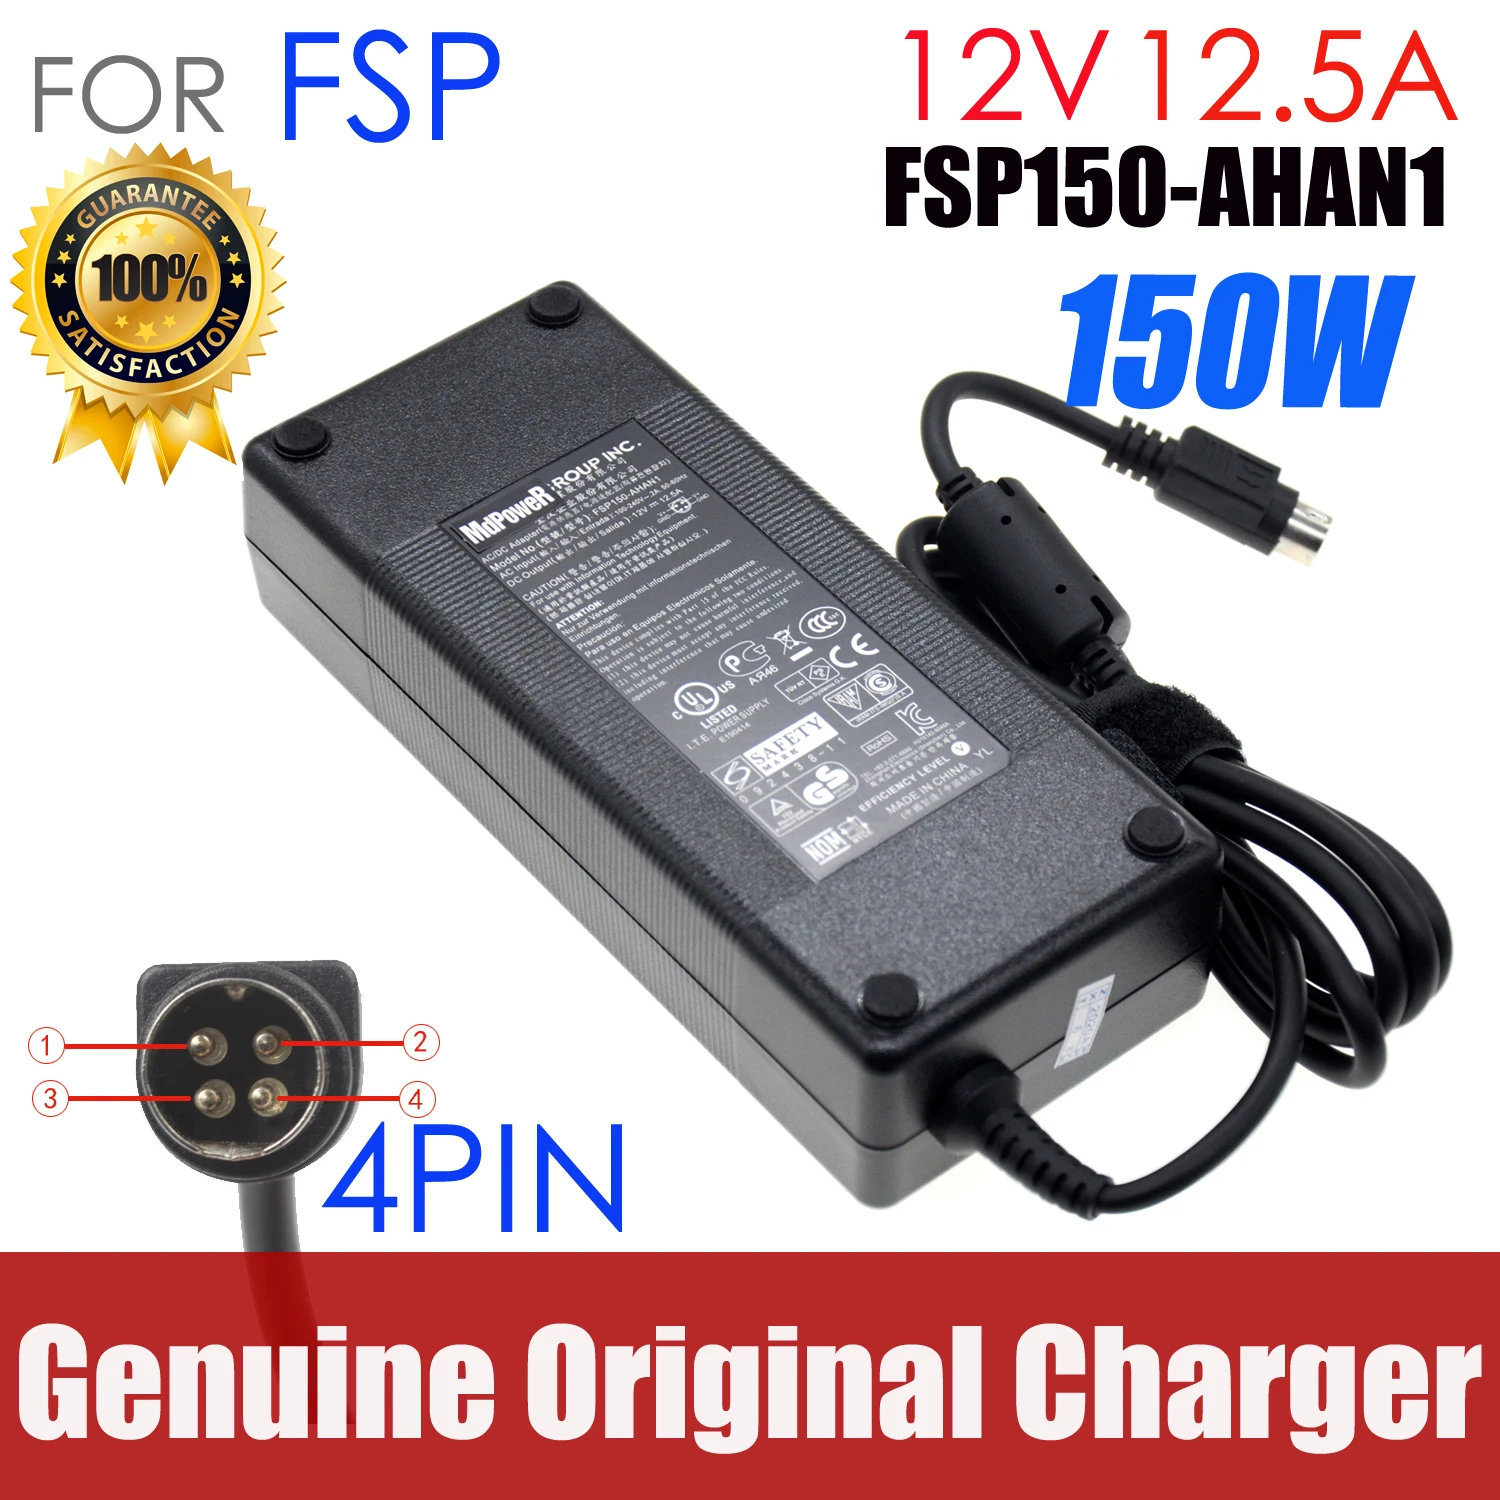 Original 12v 12.5a 150w FSP ac power supply charger adapter for QNAP TS-412 NAS TS-410 DPS-150NB-1B FSP150-AHAN1 Laptop adapter